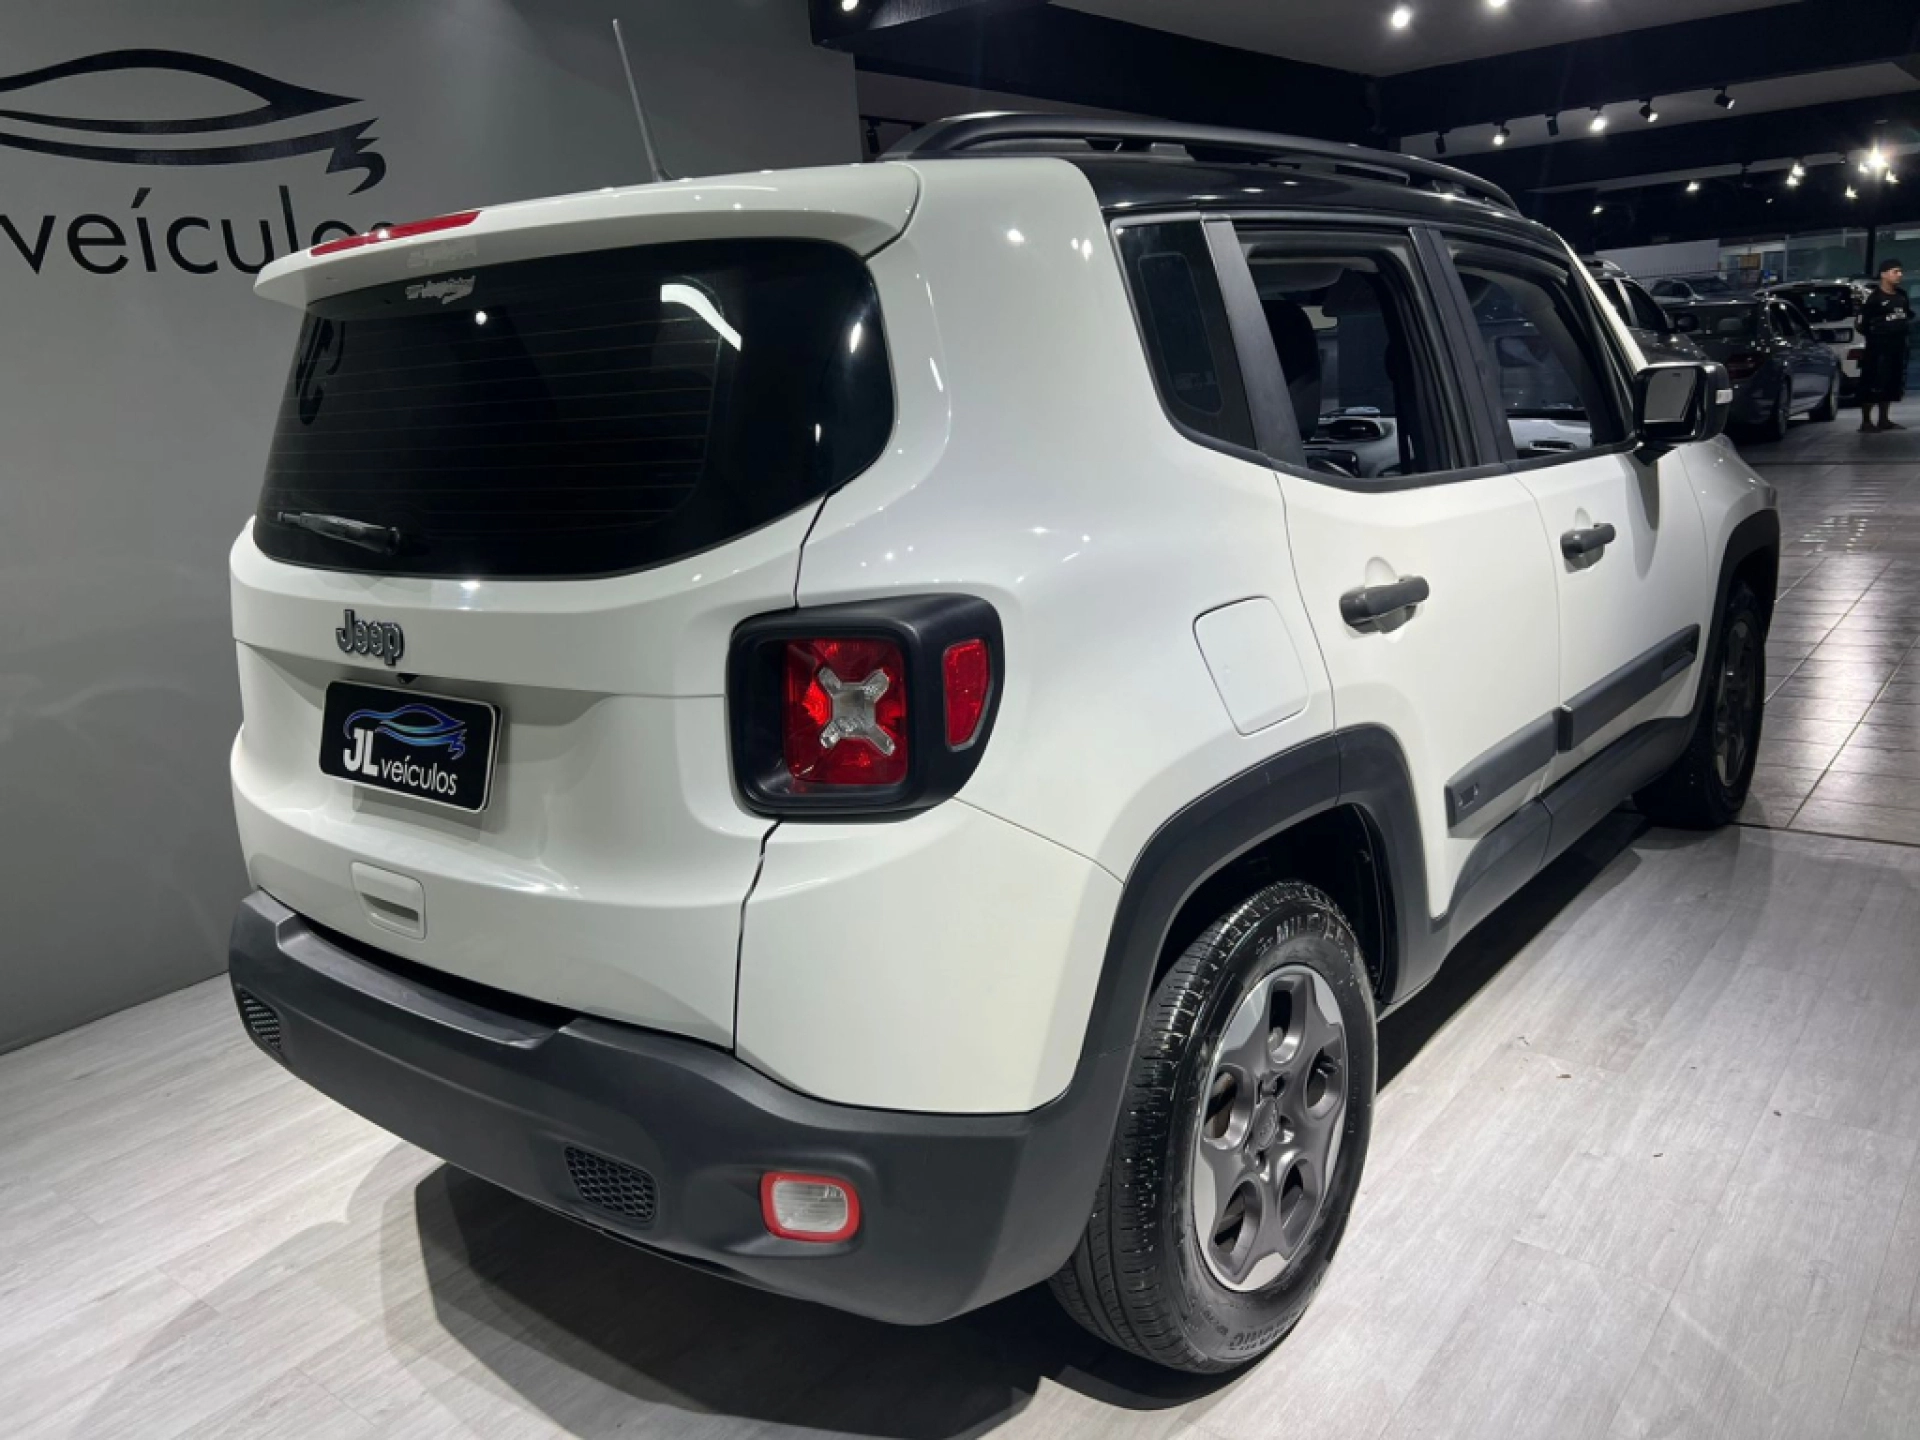 Jeep Renegade 1.8 2020